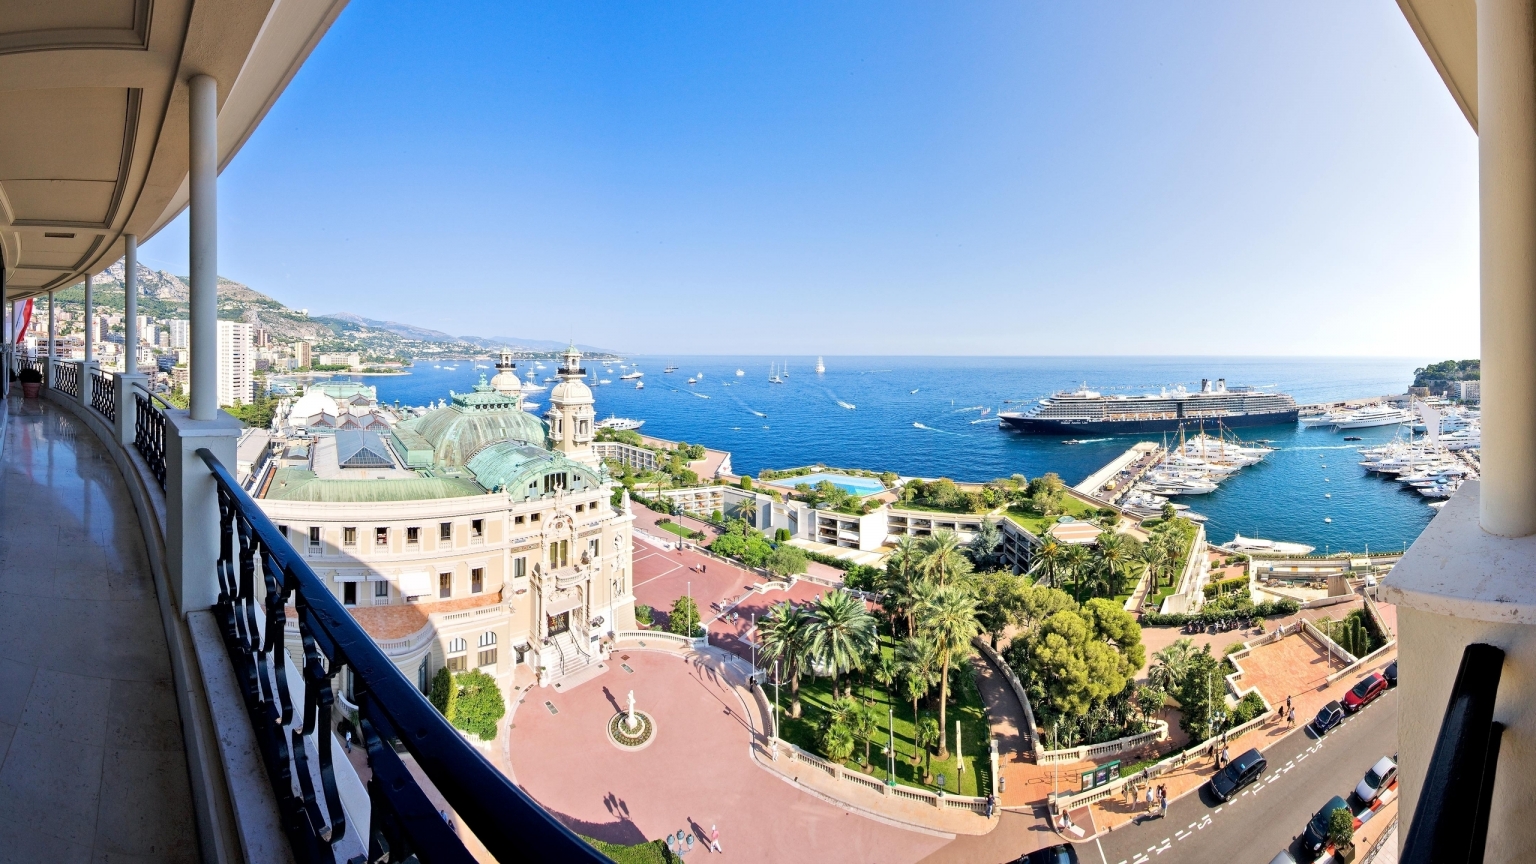 Monaco View for 1536 x 864 HDTV resolution